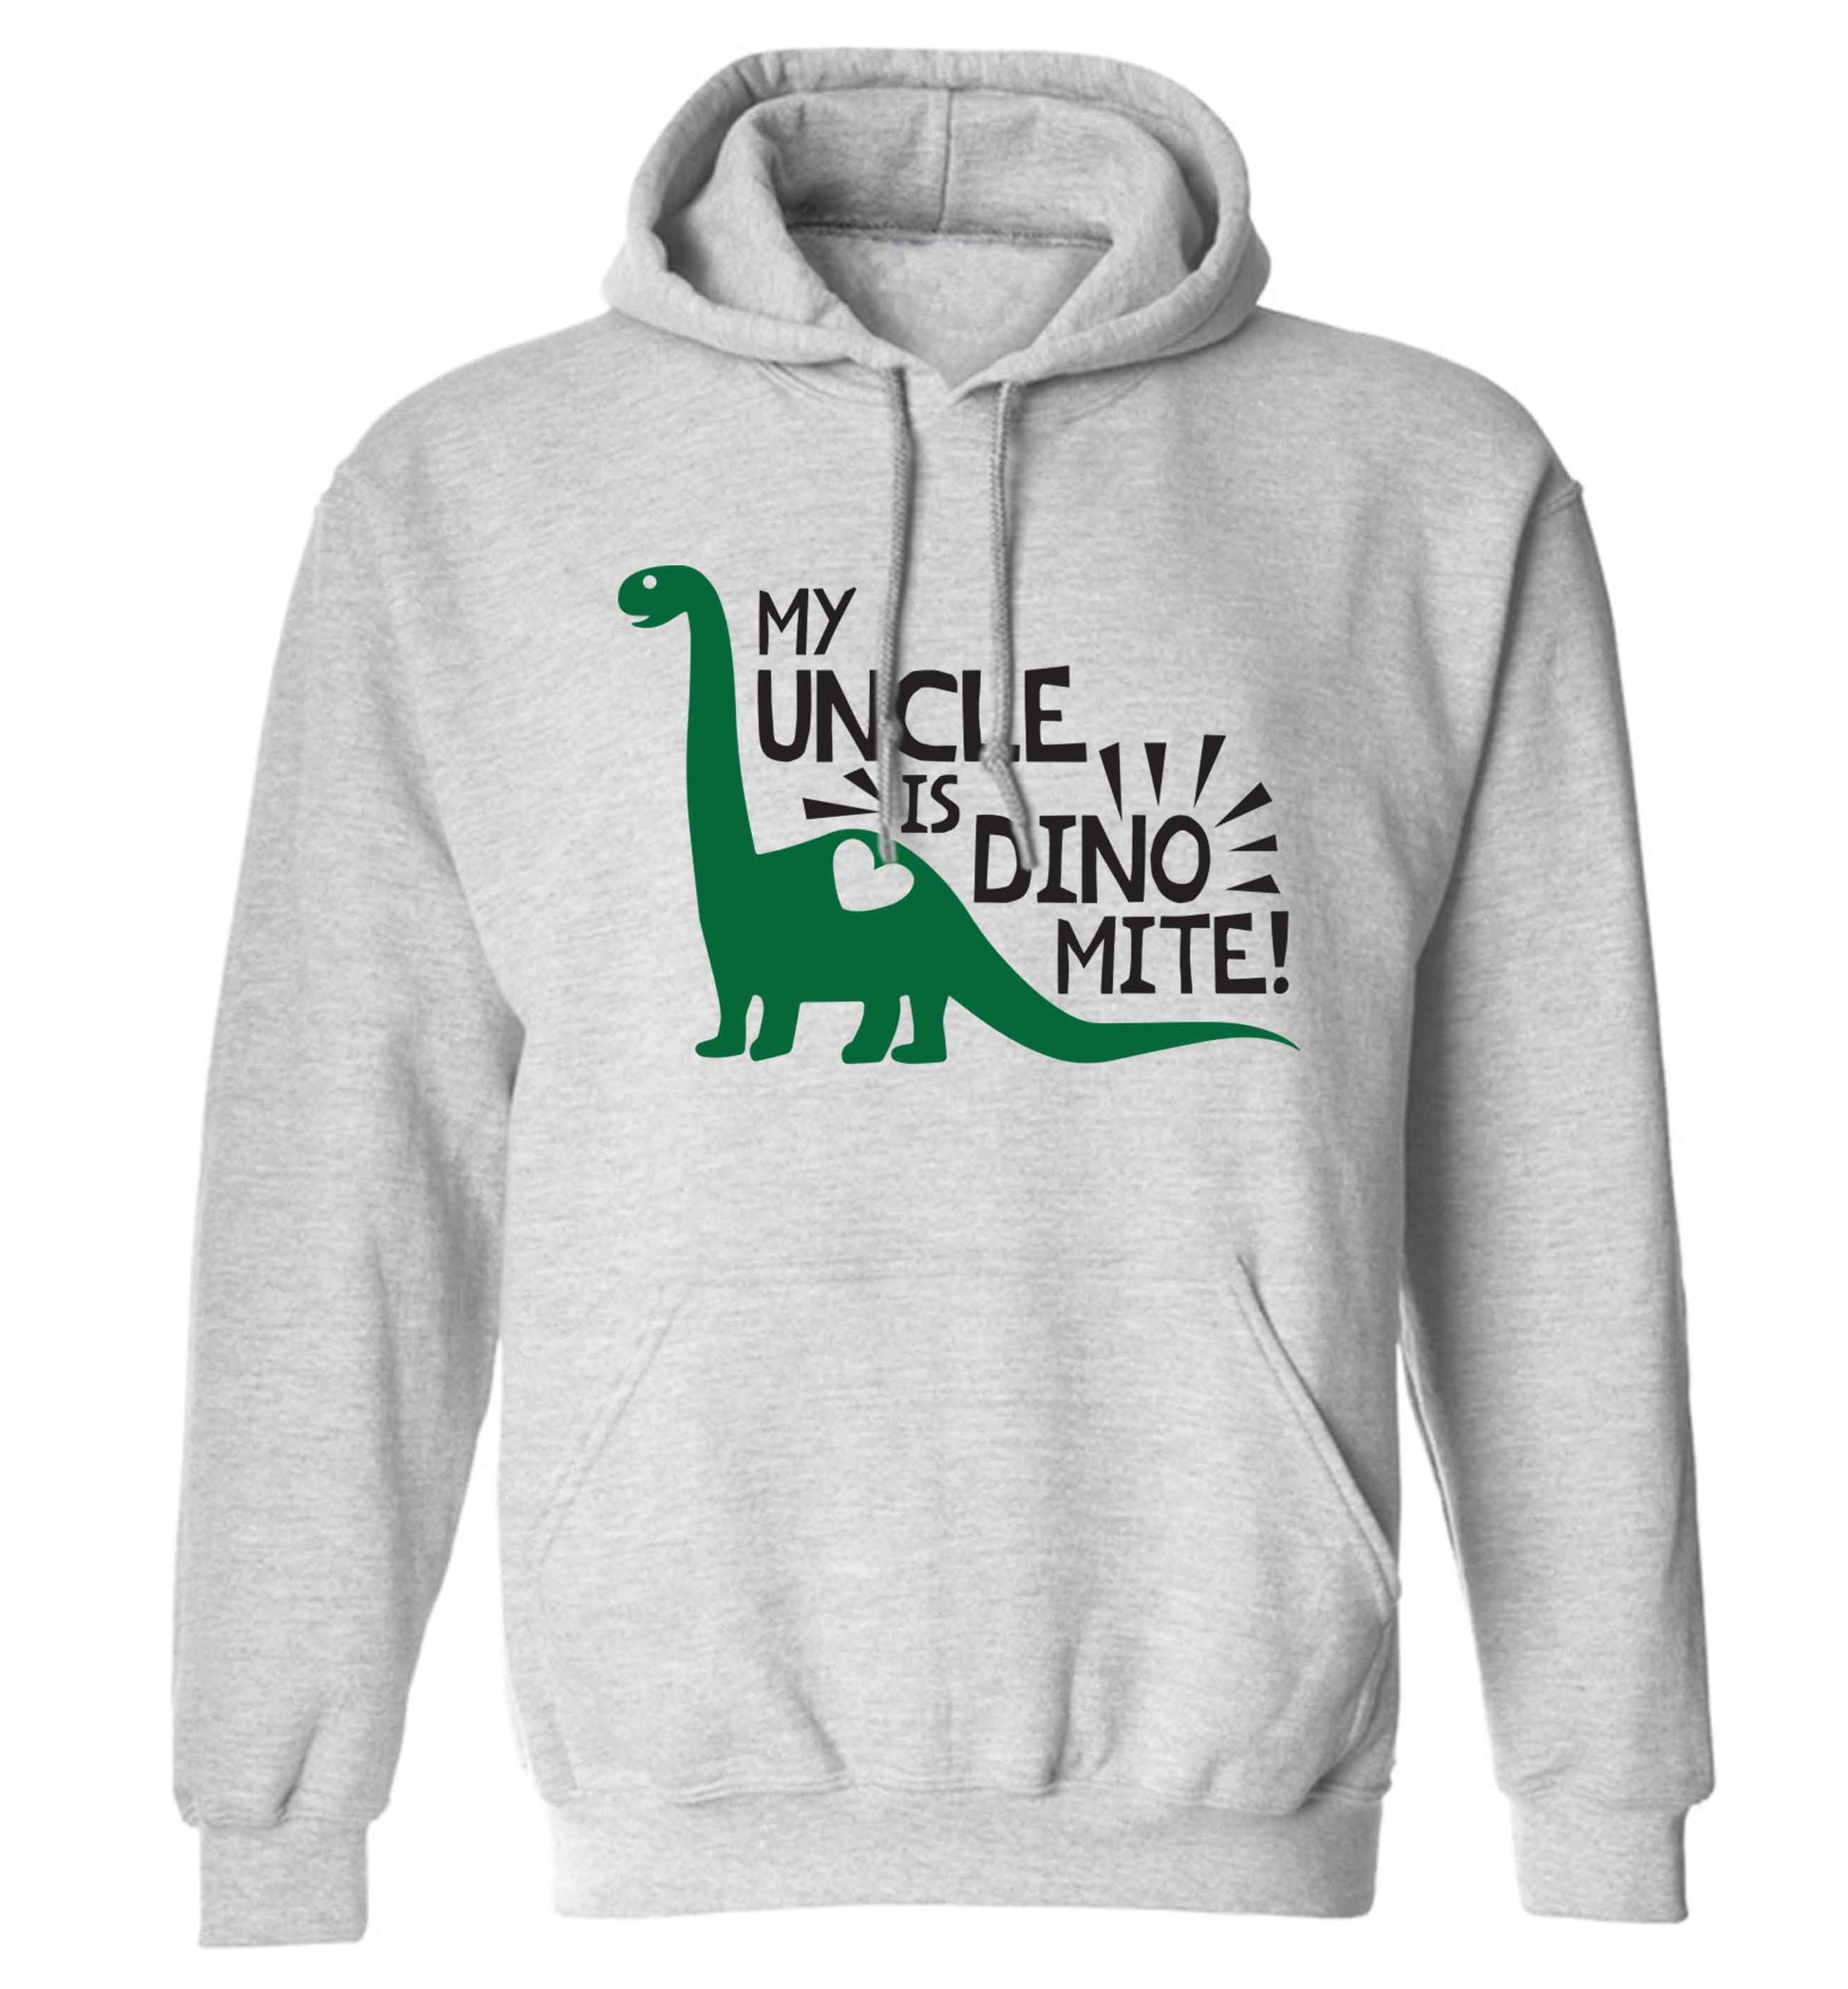 My uncle is dinomite! adults unisex grey hoodie 2XL